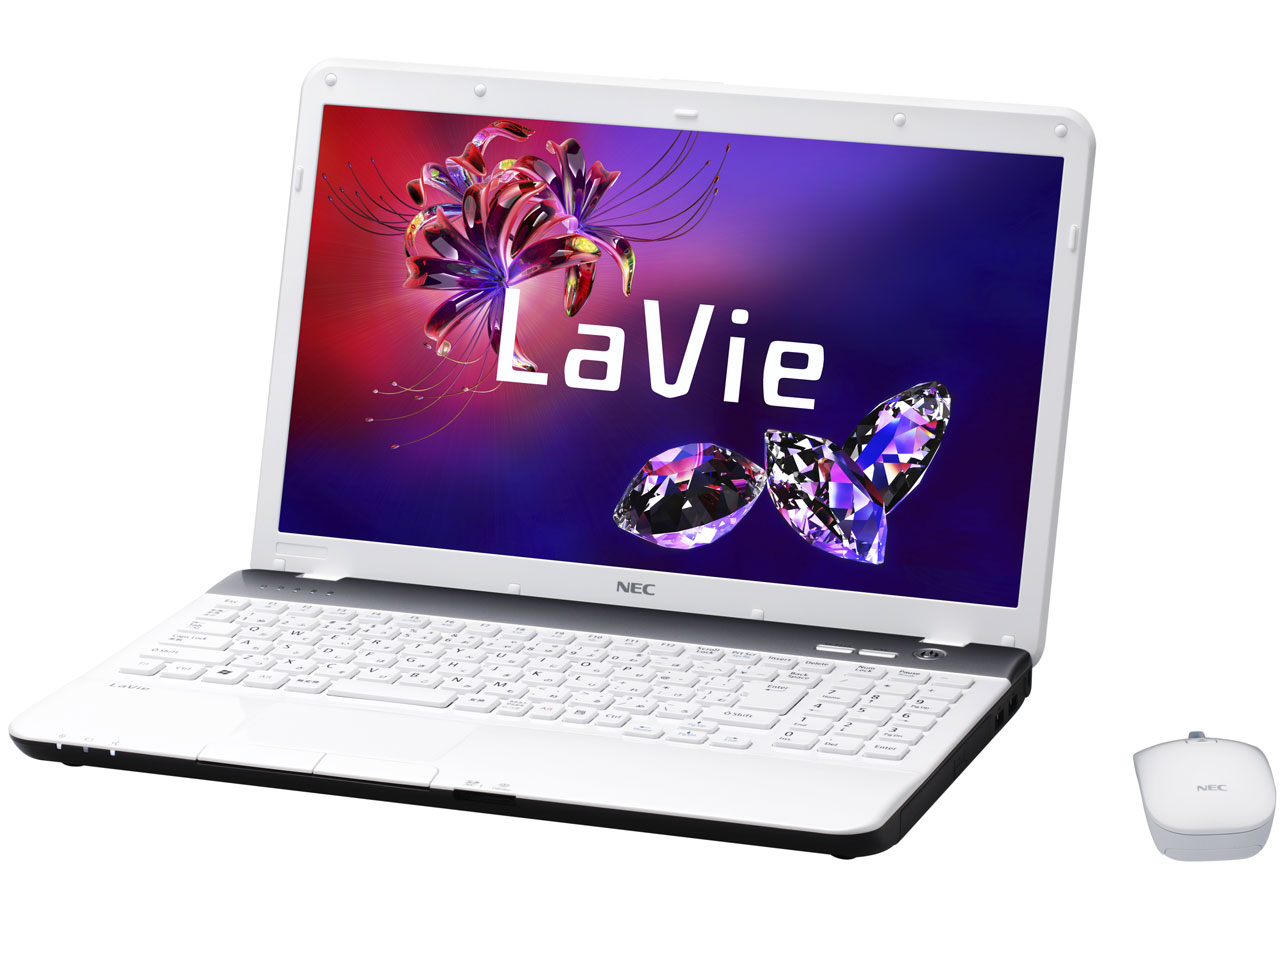 NEC LaVie S LS150/F26W PC-LS150F26W [エクストラホワイト] 価格比較 - 価格.com